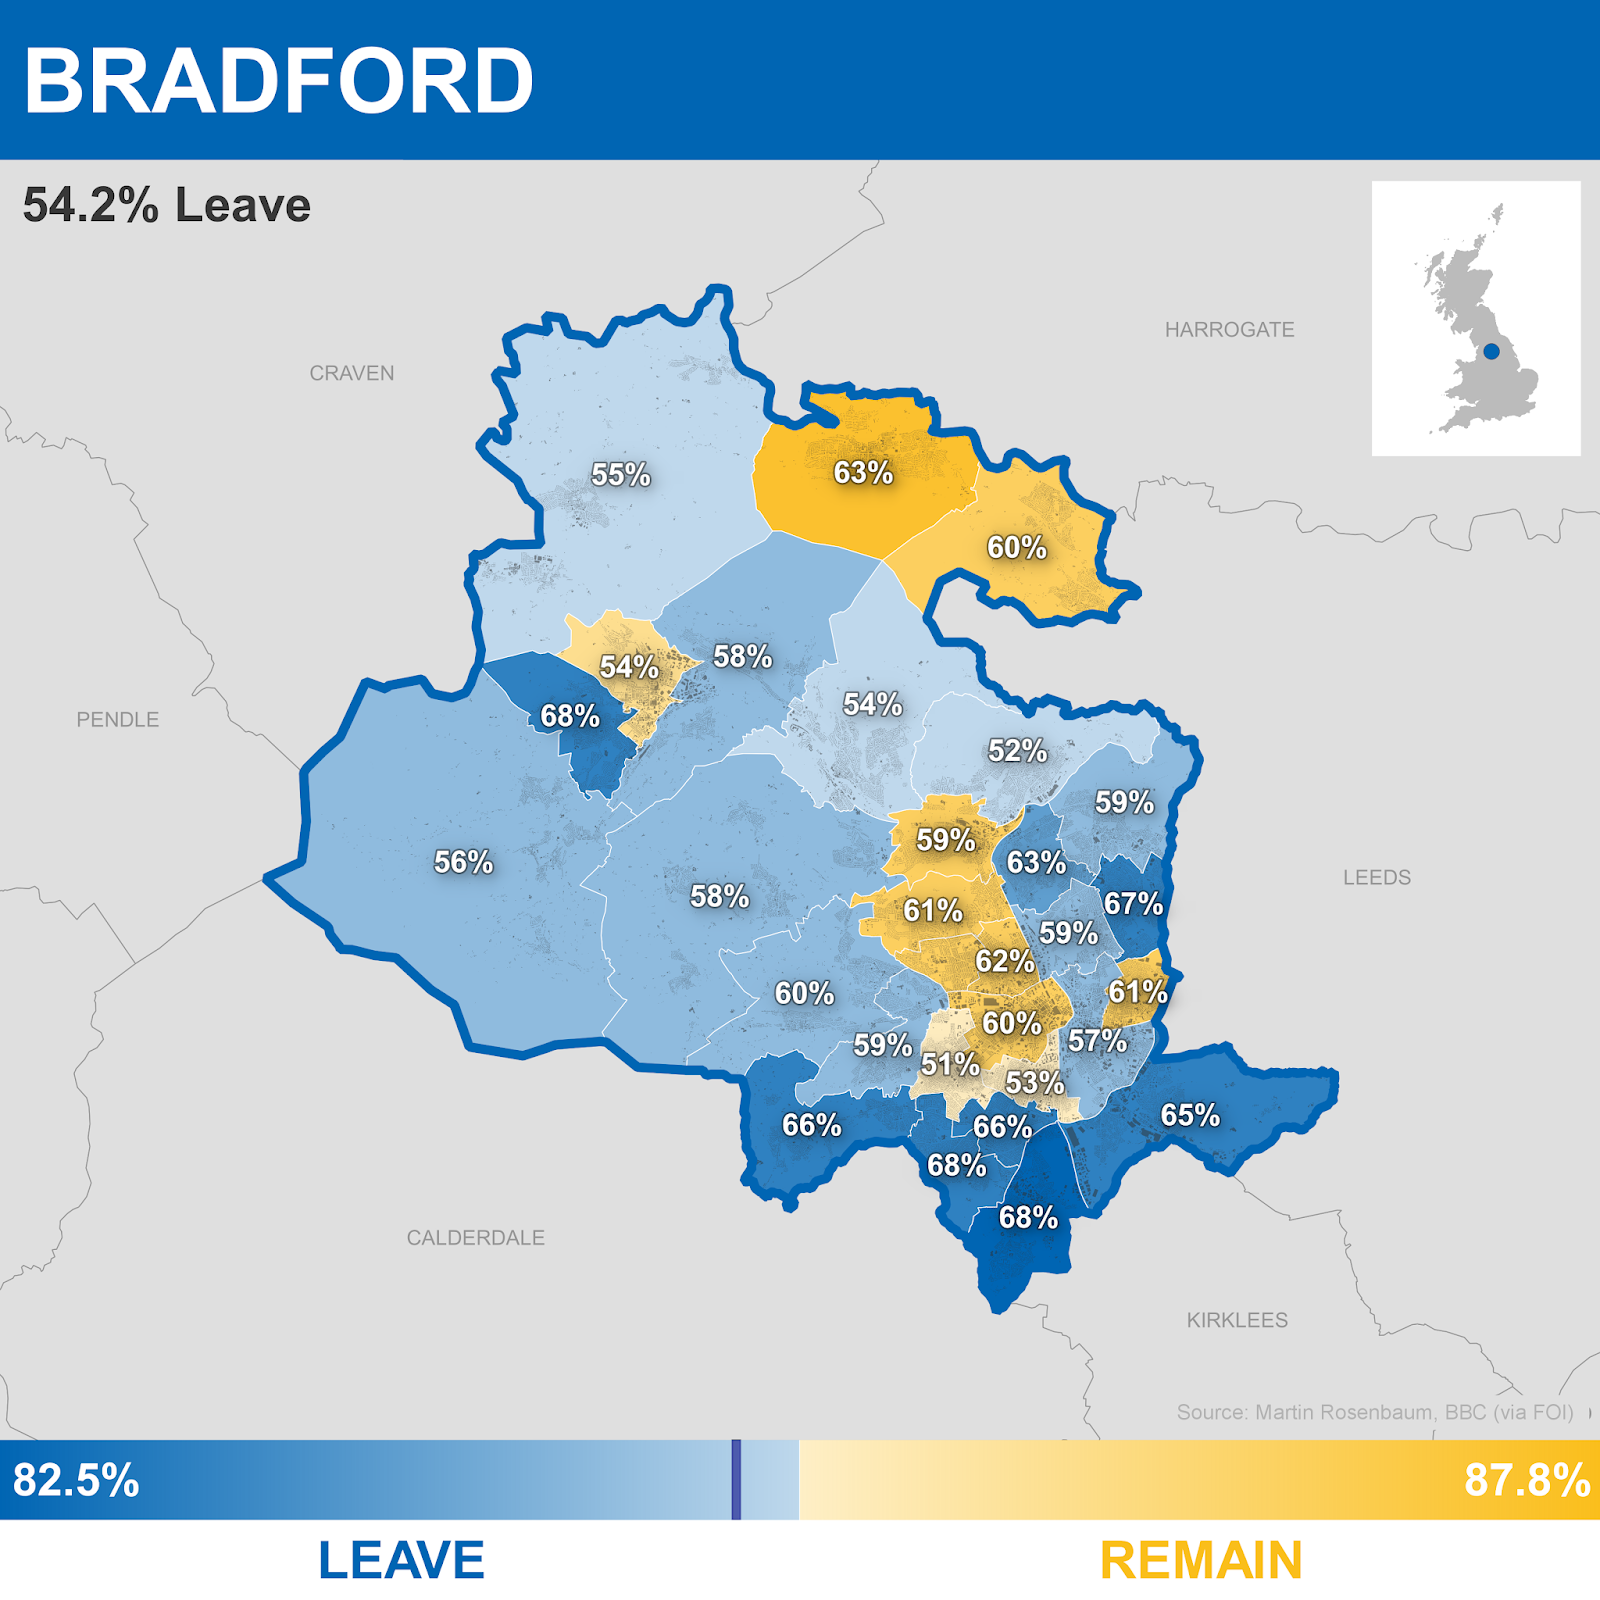 Bradford referendum results